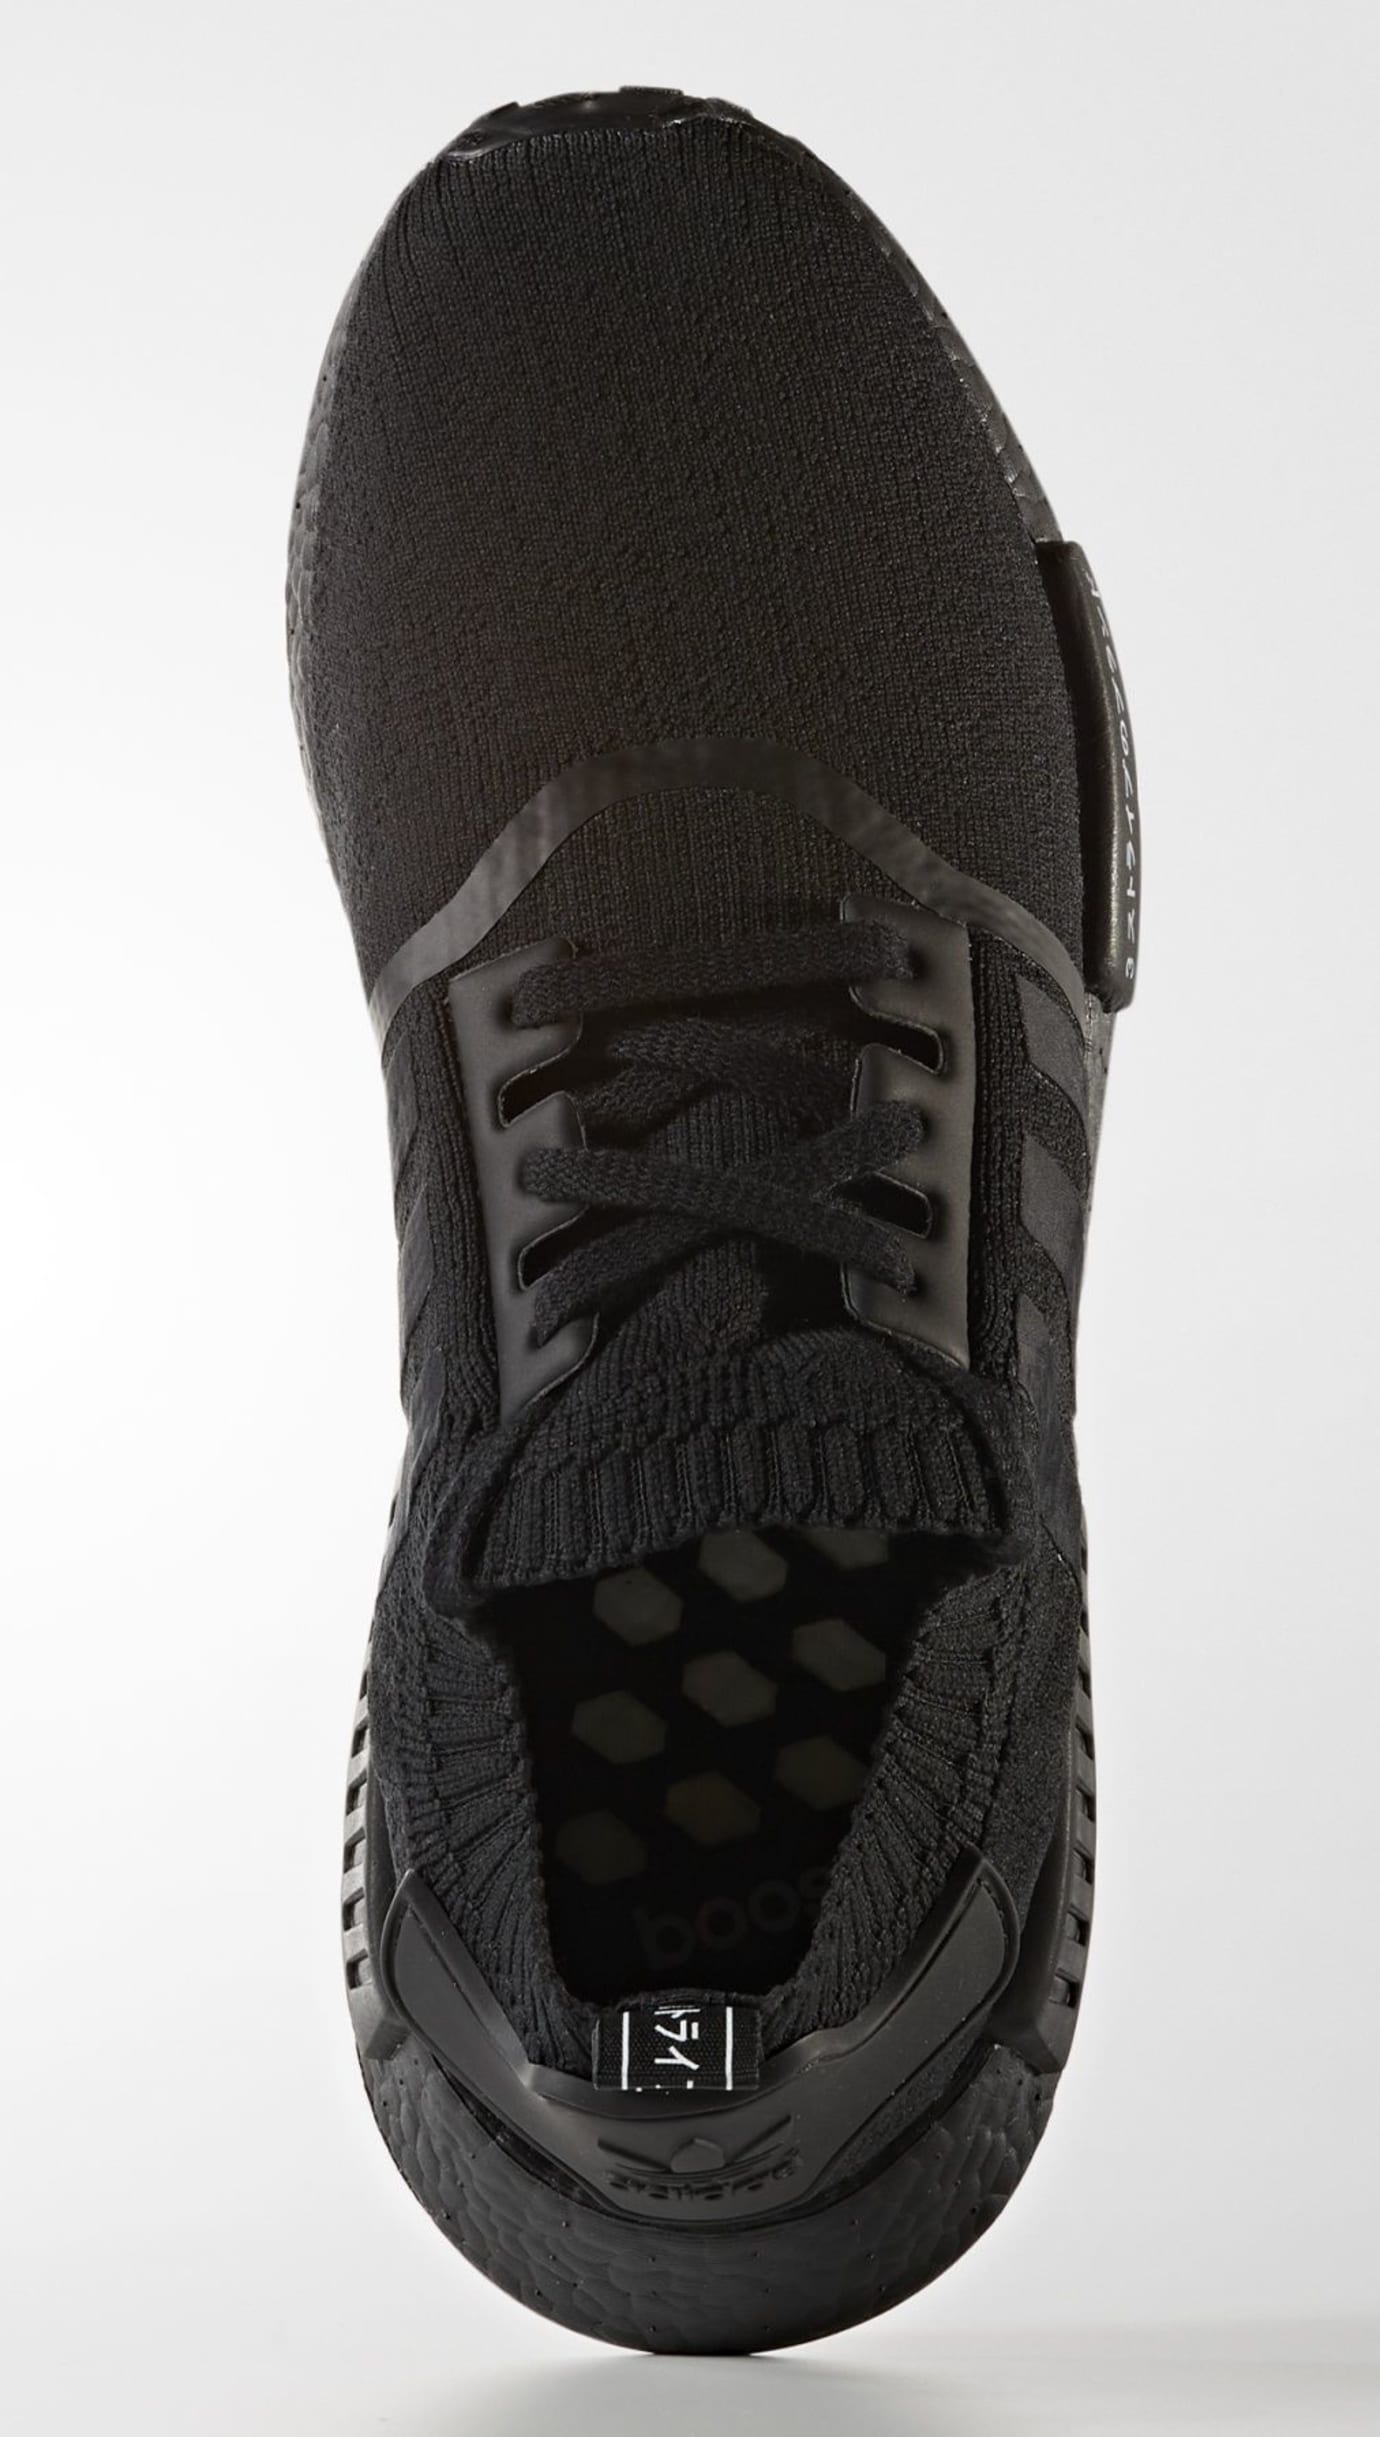 Adidas NMD_R1 Primeknit 'Japan Pack' Release BZ0221, 'Triple Black': BZ0220 | Collector